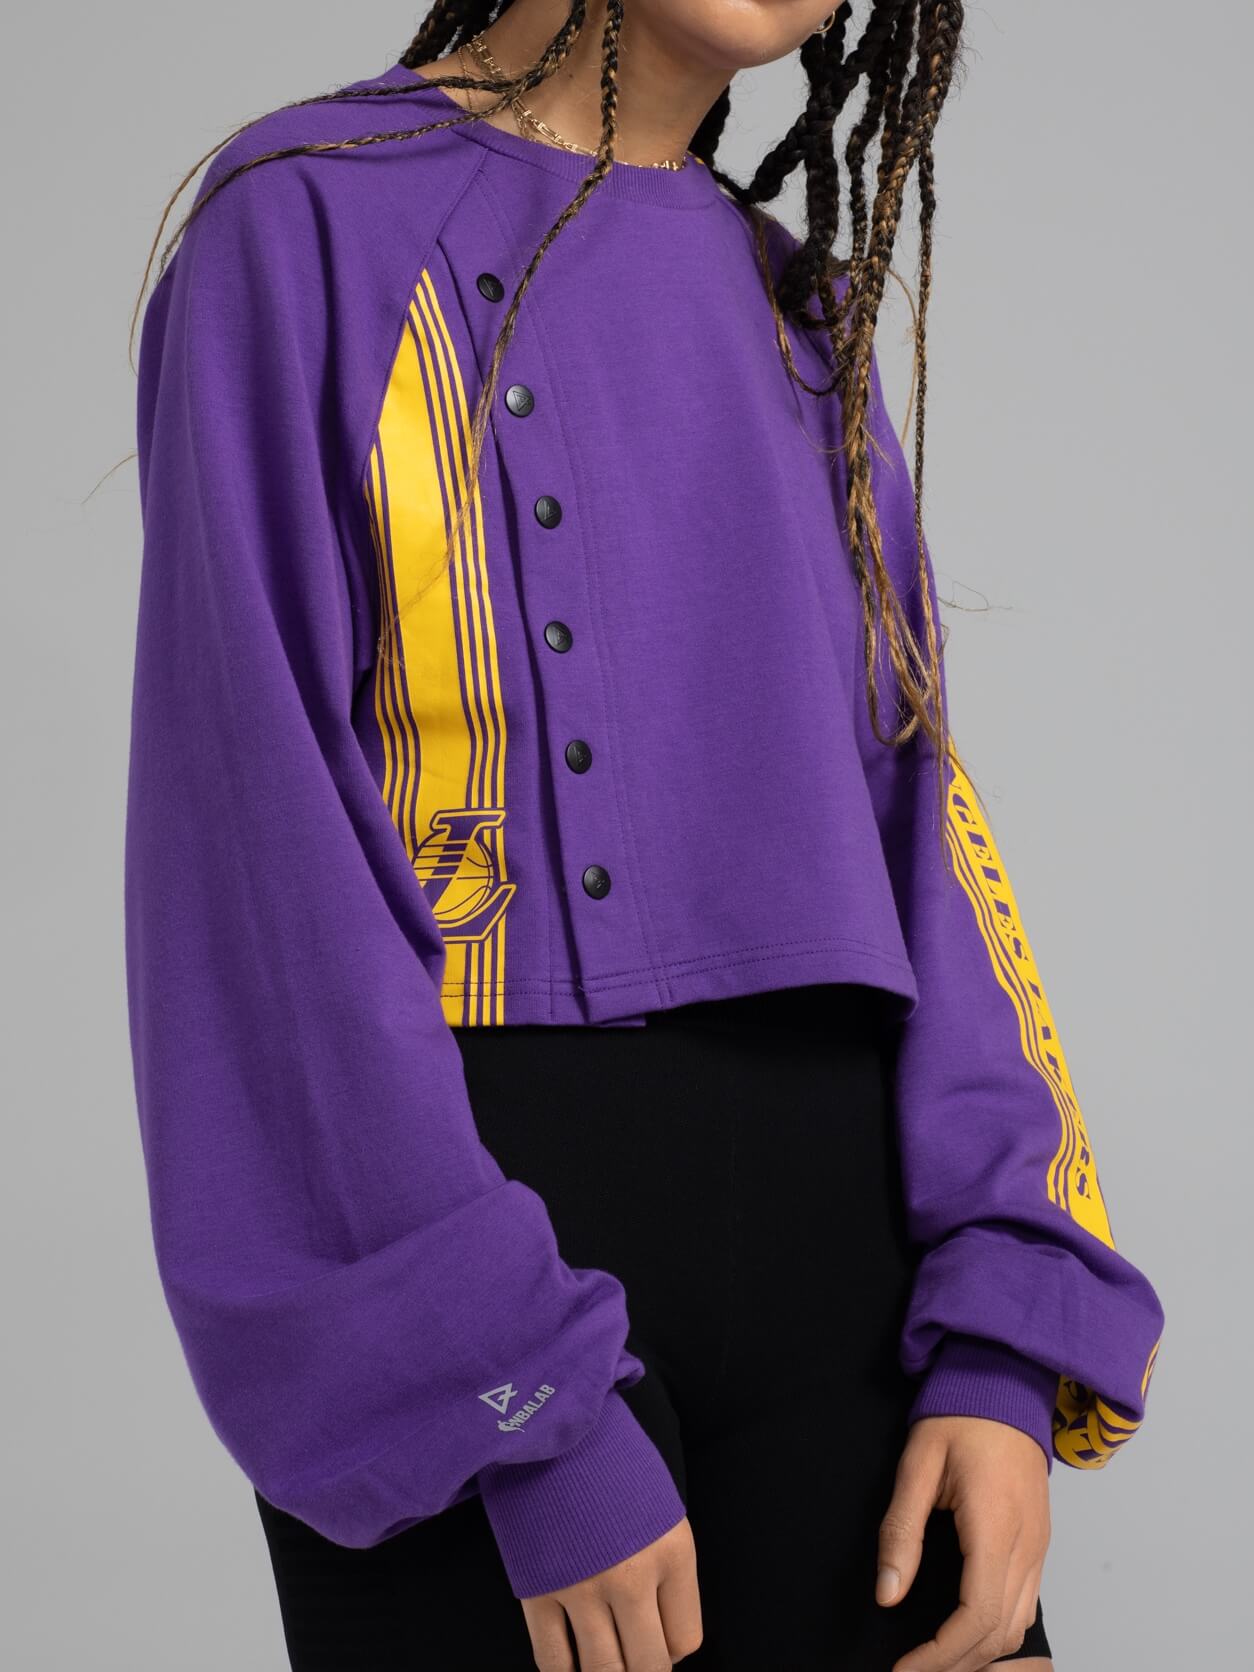 Los Angeles Lakers Womens in Los Angeles Lakers Team Shop